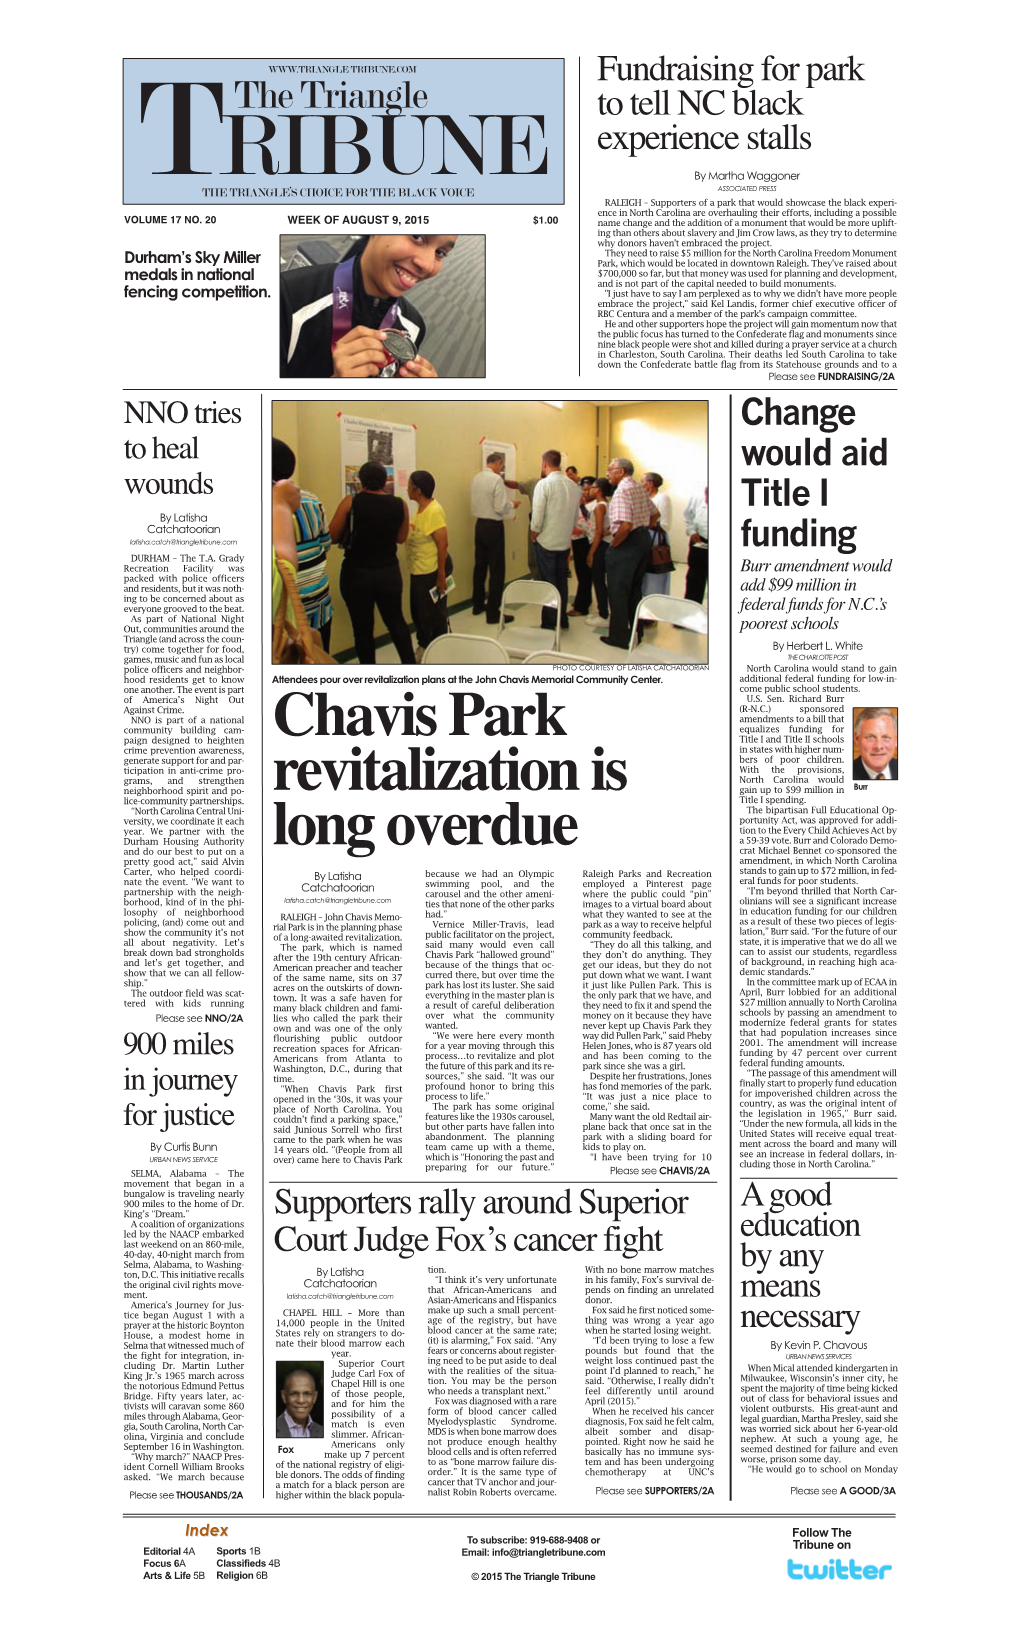 Chavis Park Revitalization Is Long Overdue